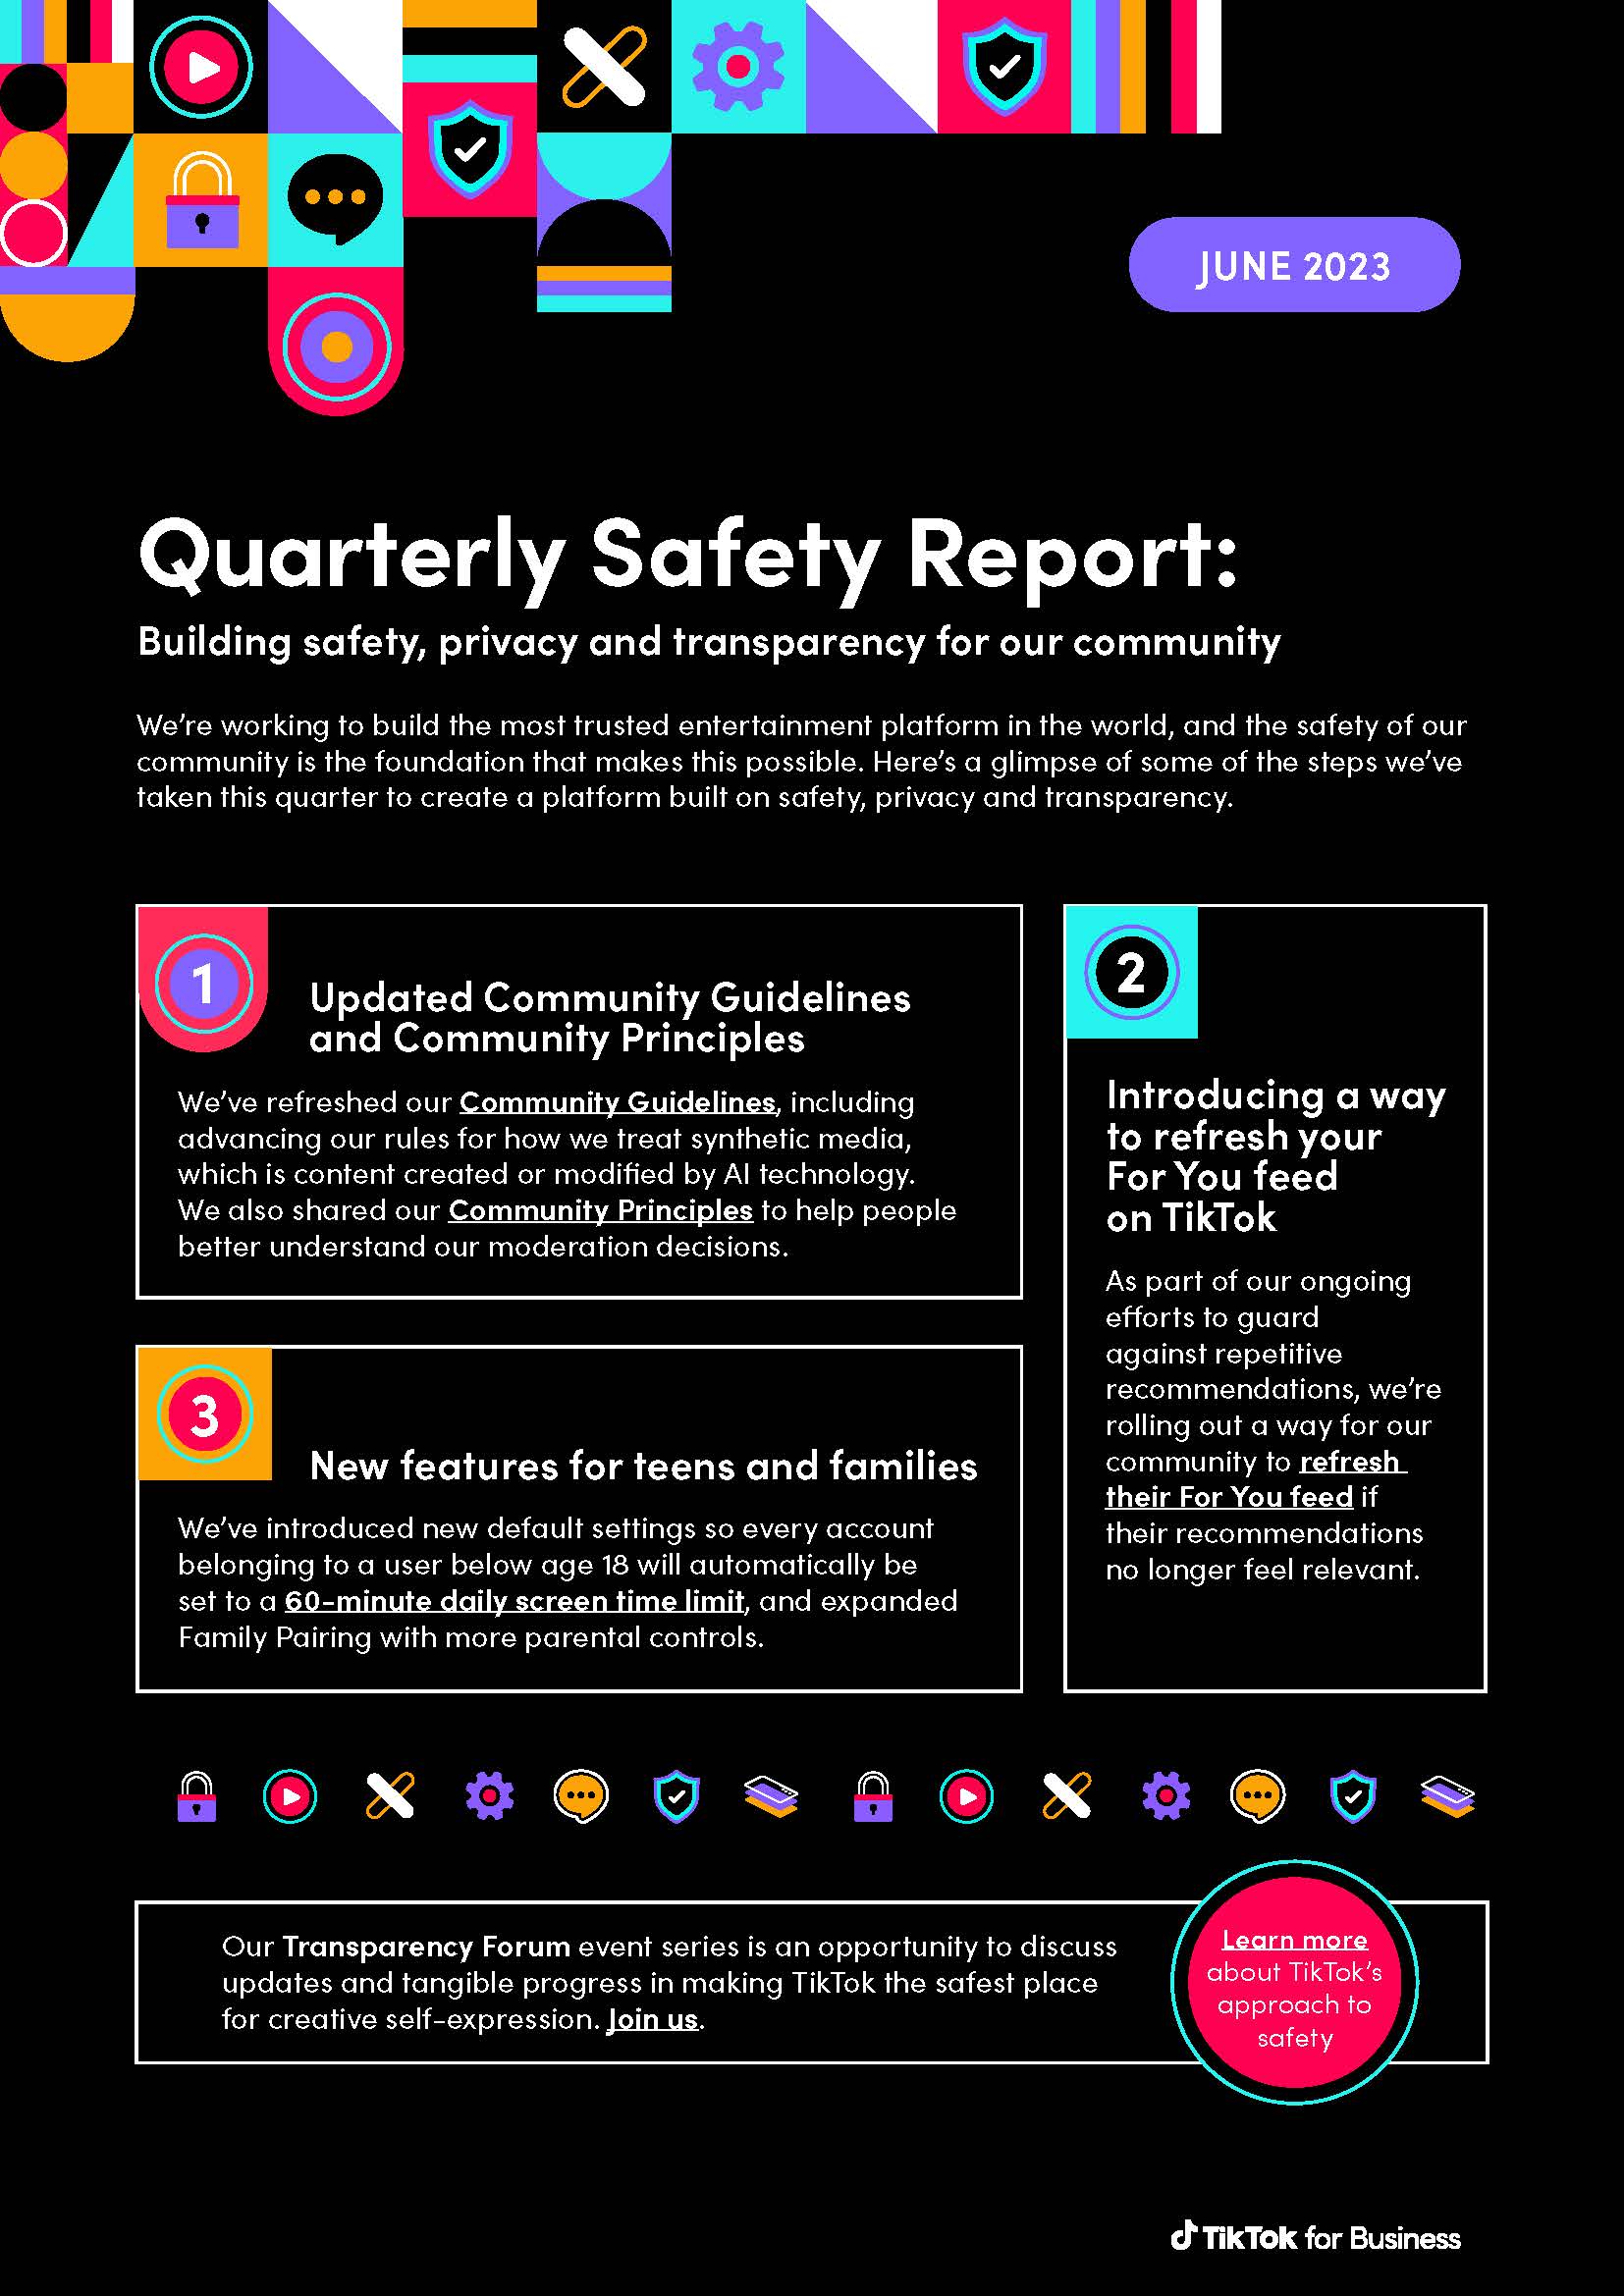 TikTok Quarterly Safety Report Q2 - June 2023